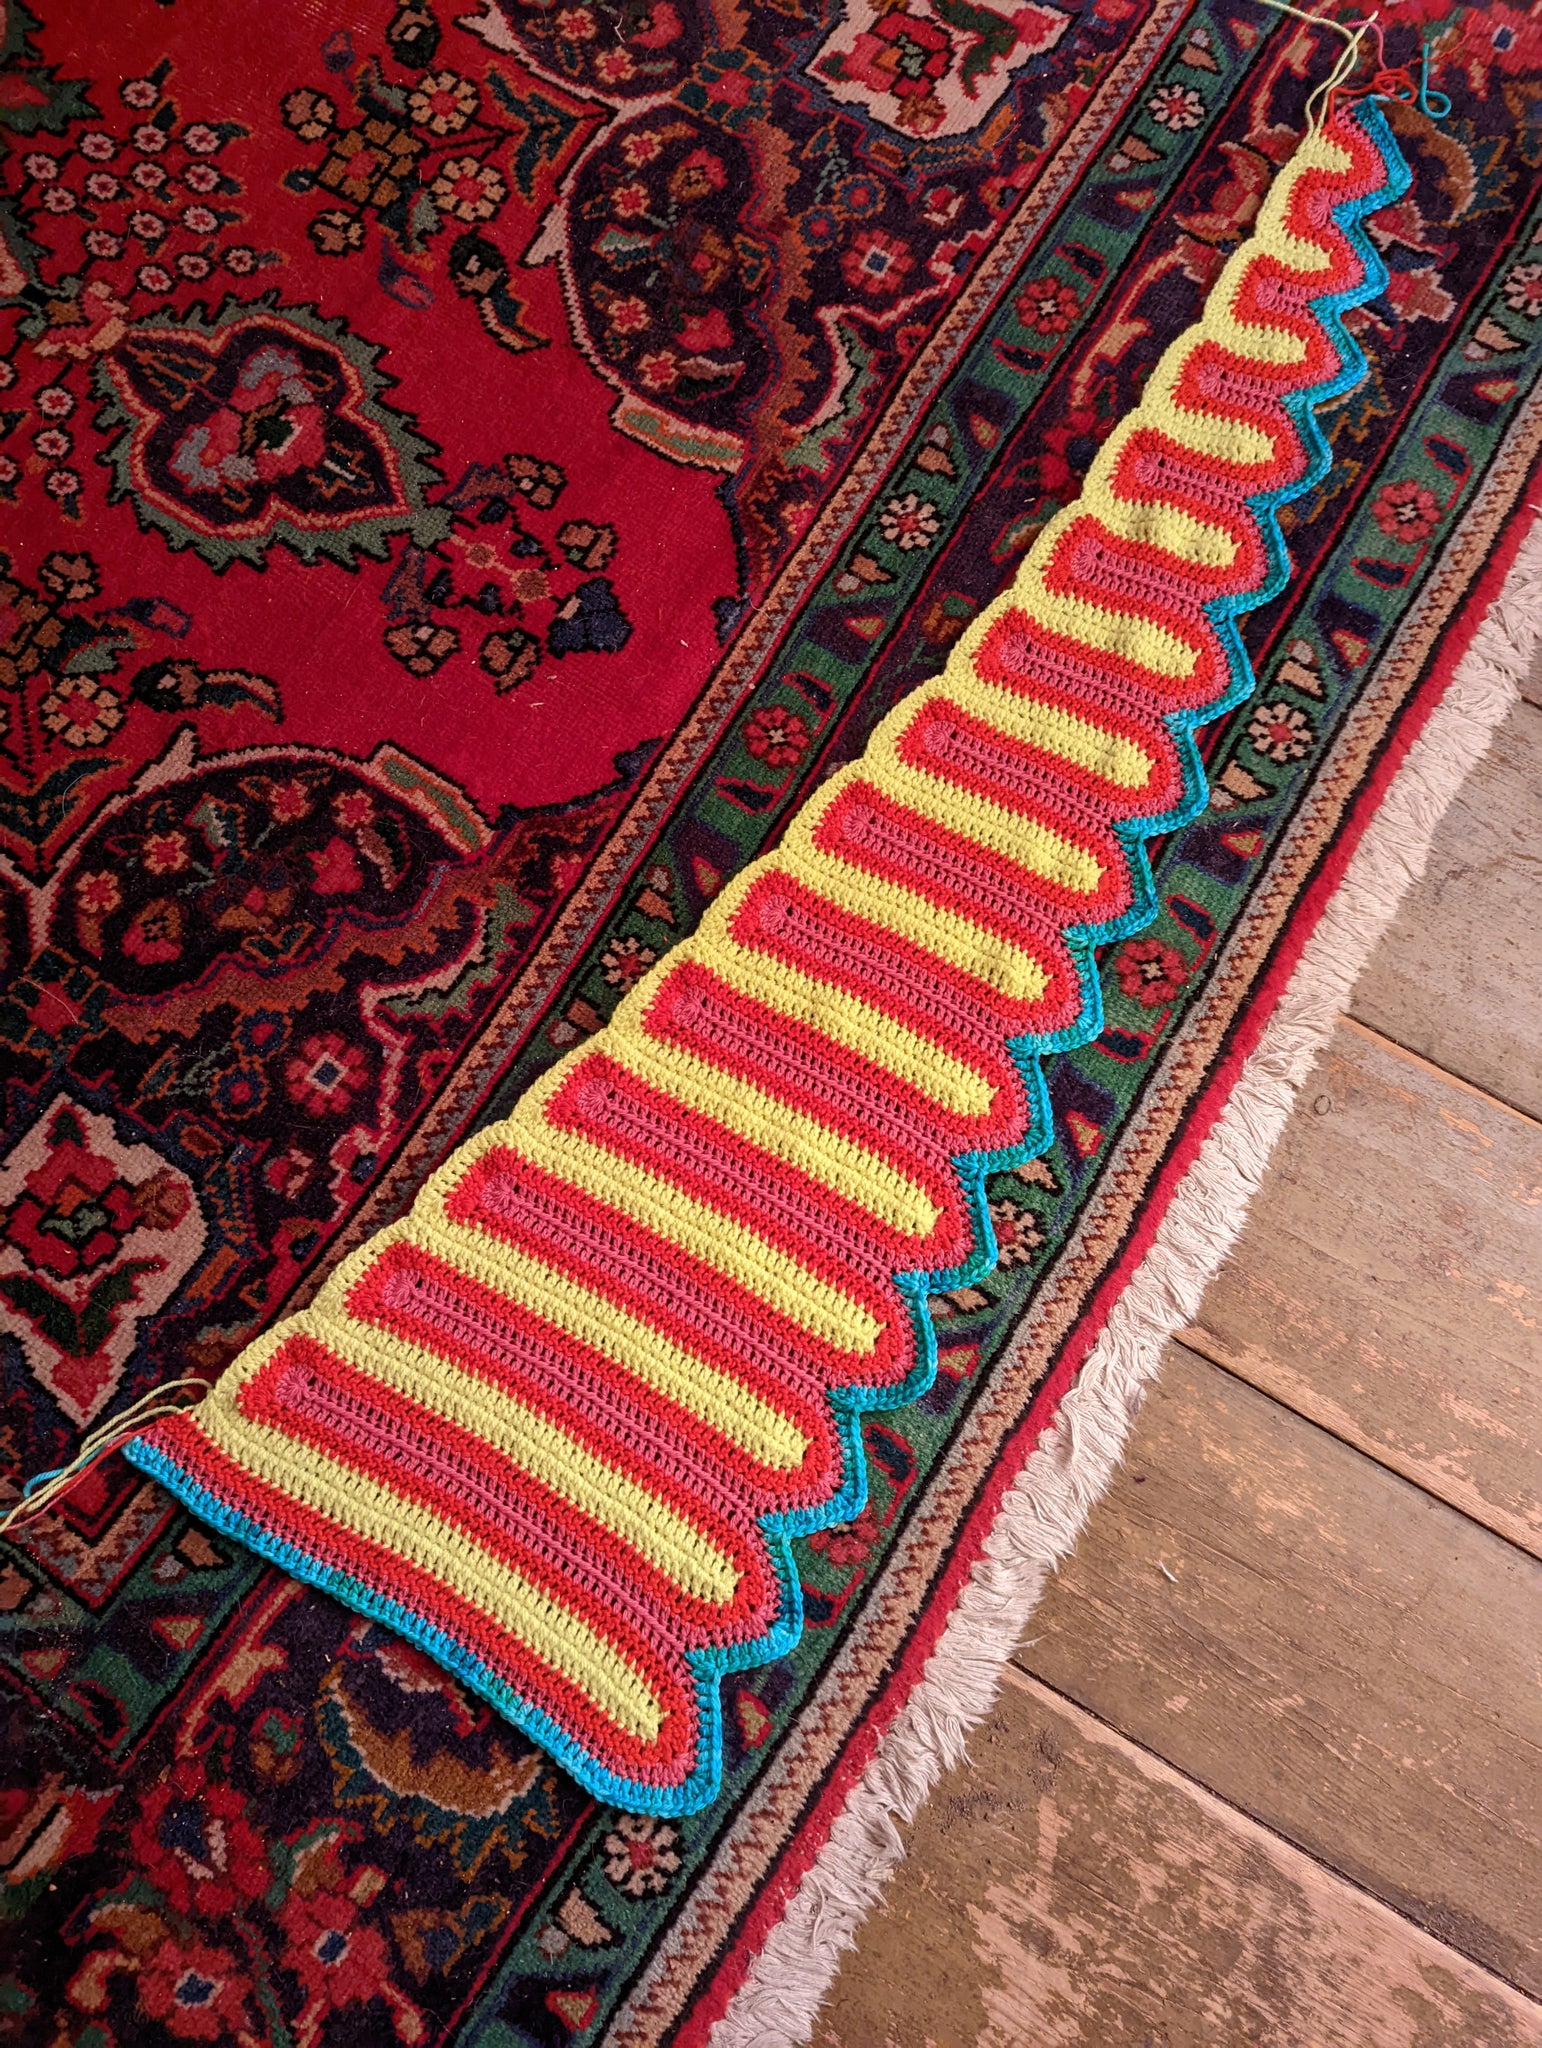 'Wavecrest' Dragon Tail Shawl Downloadable Crochet Pattern